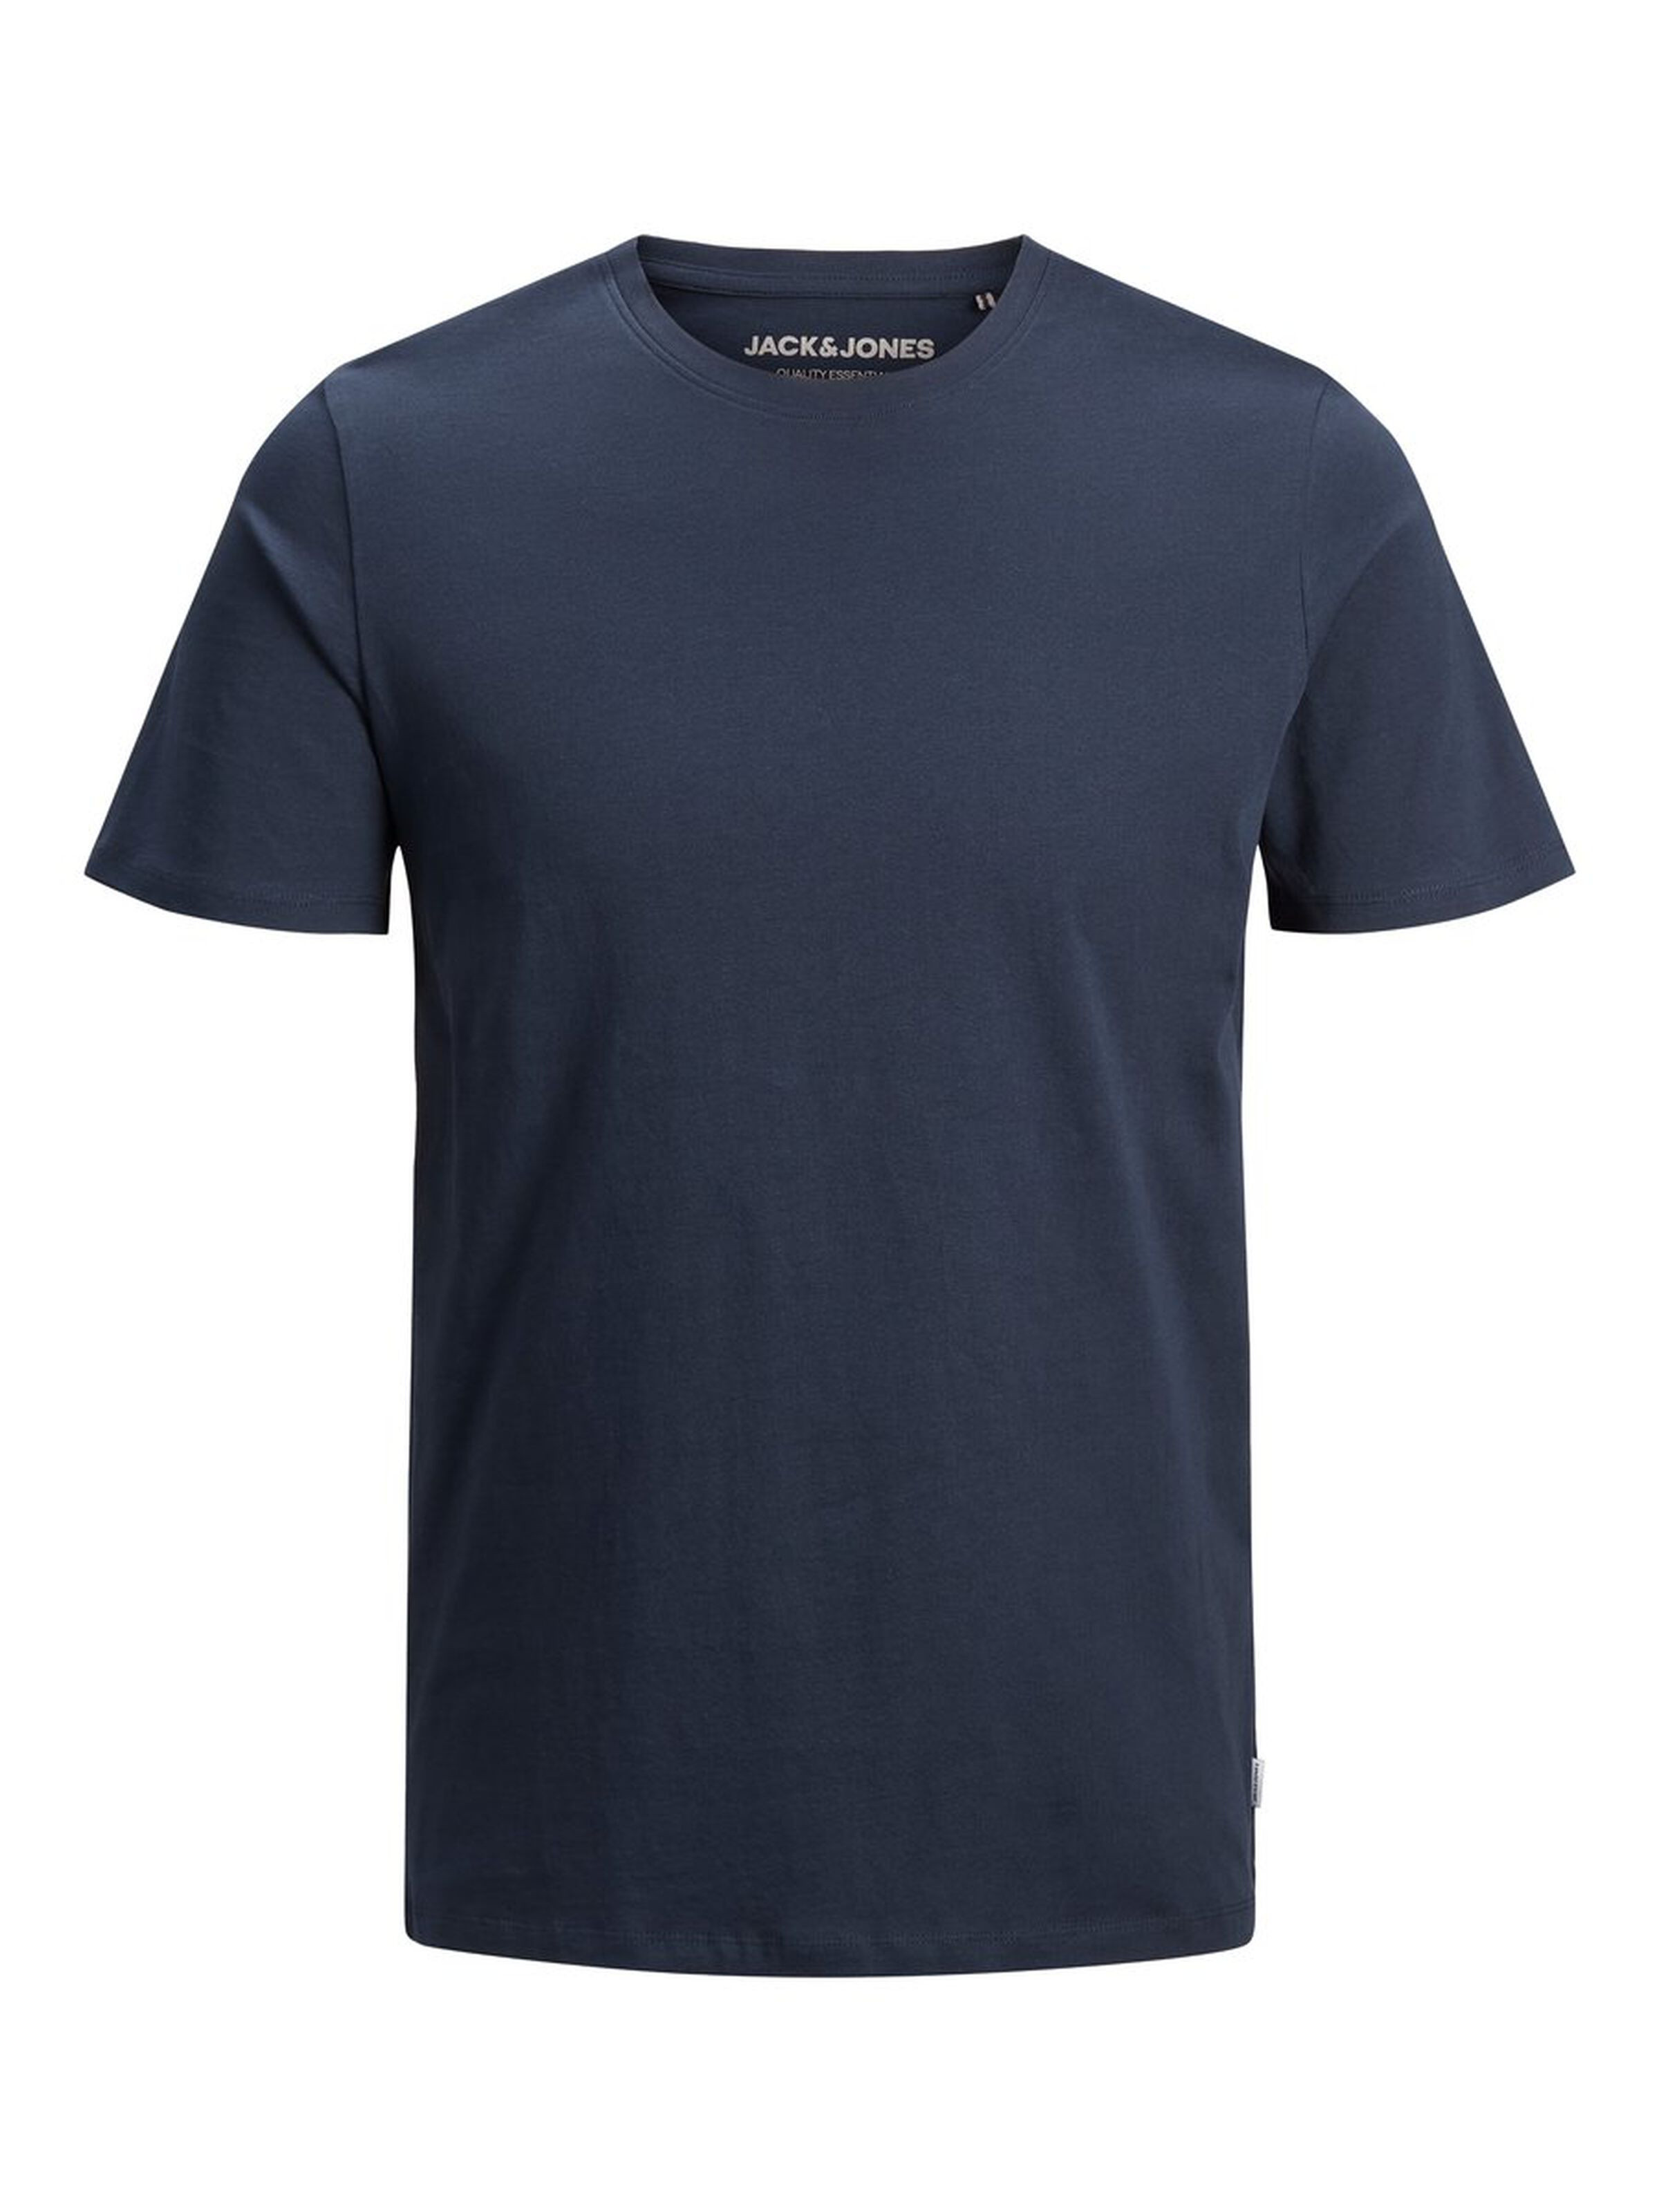 Jack & Jones - T-shirt in cotone, Blu scuro, large image number 0